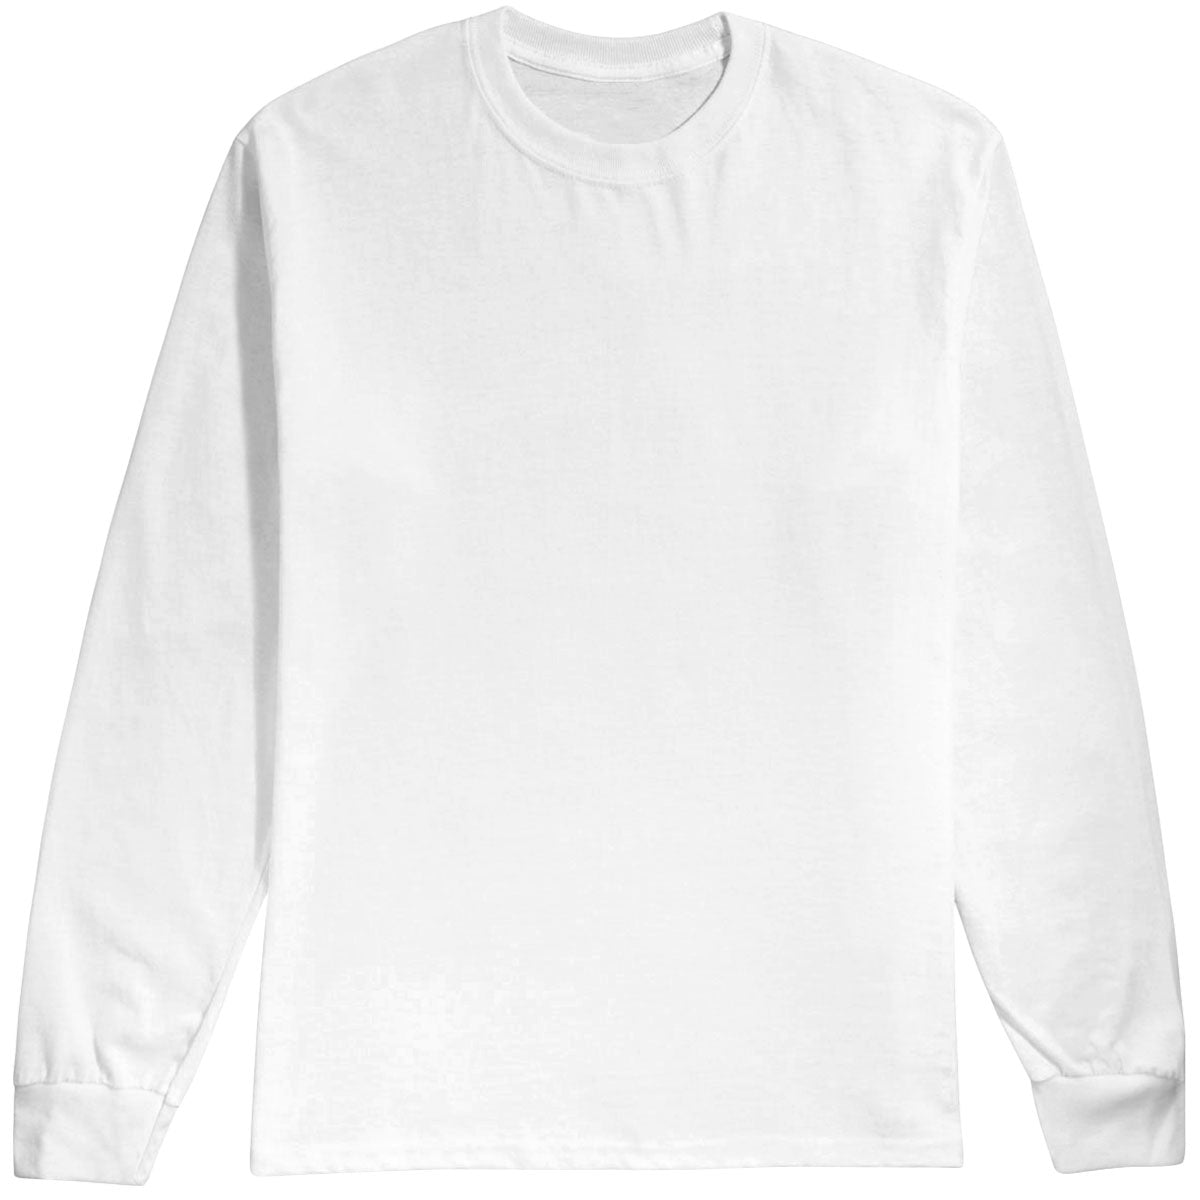 Alien Workshop Triad Sticker Long Sleeve T-Shirt - White - MD image 1